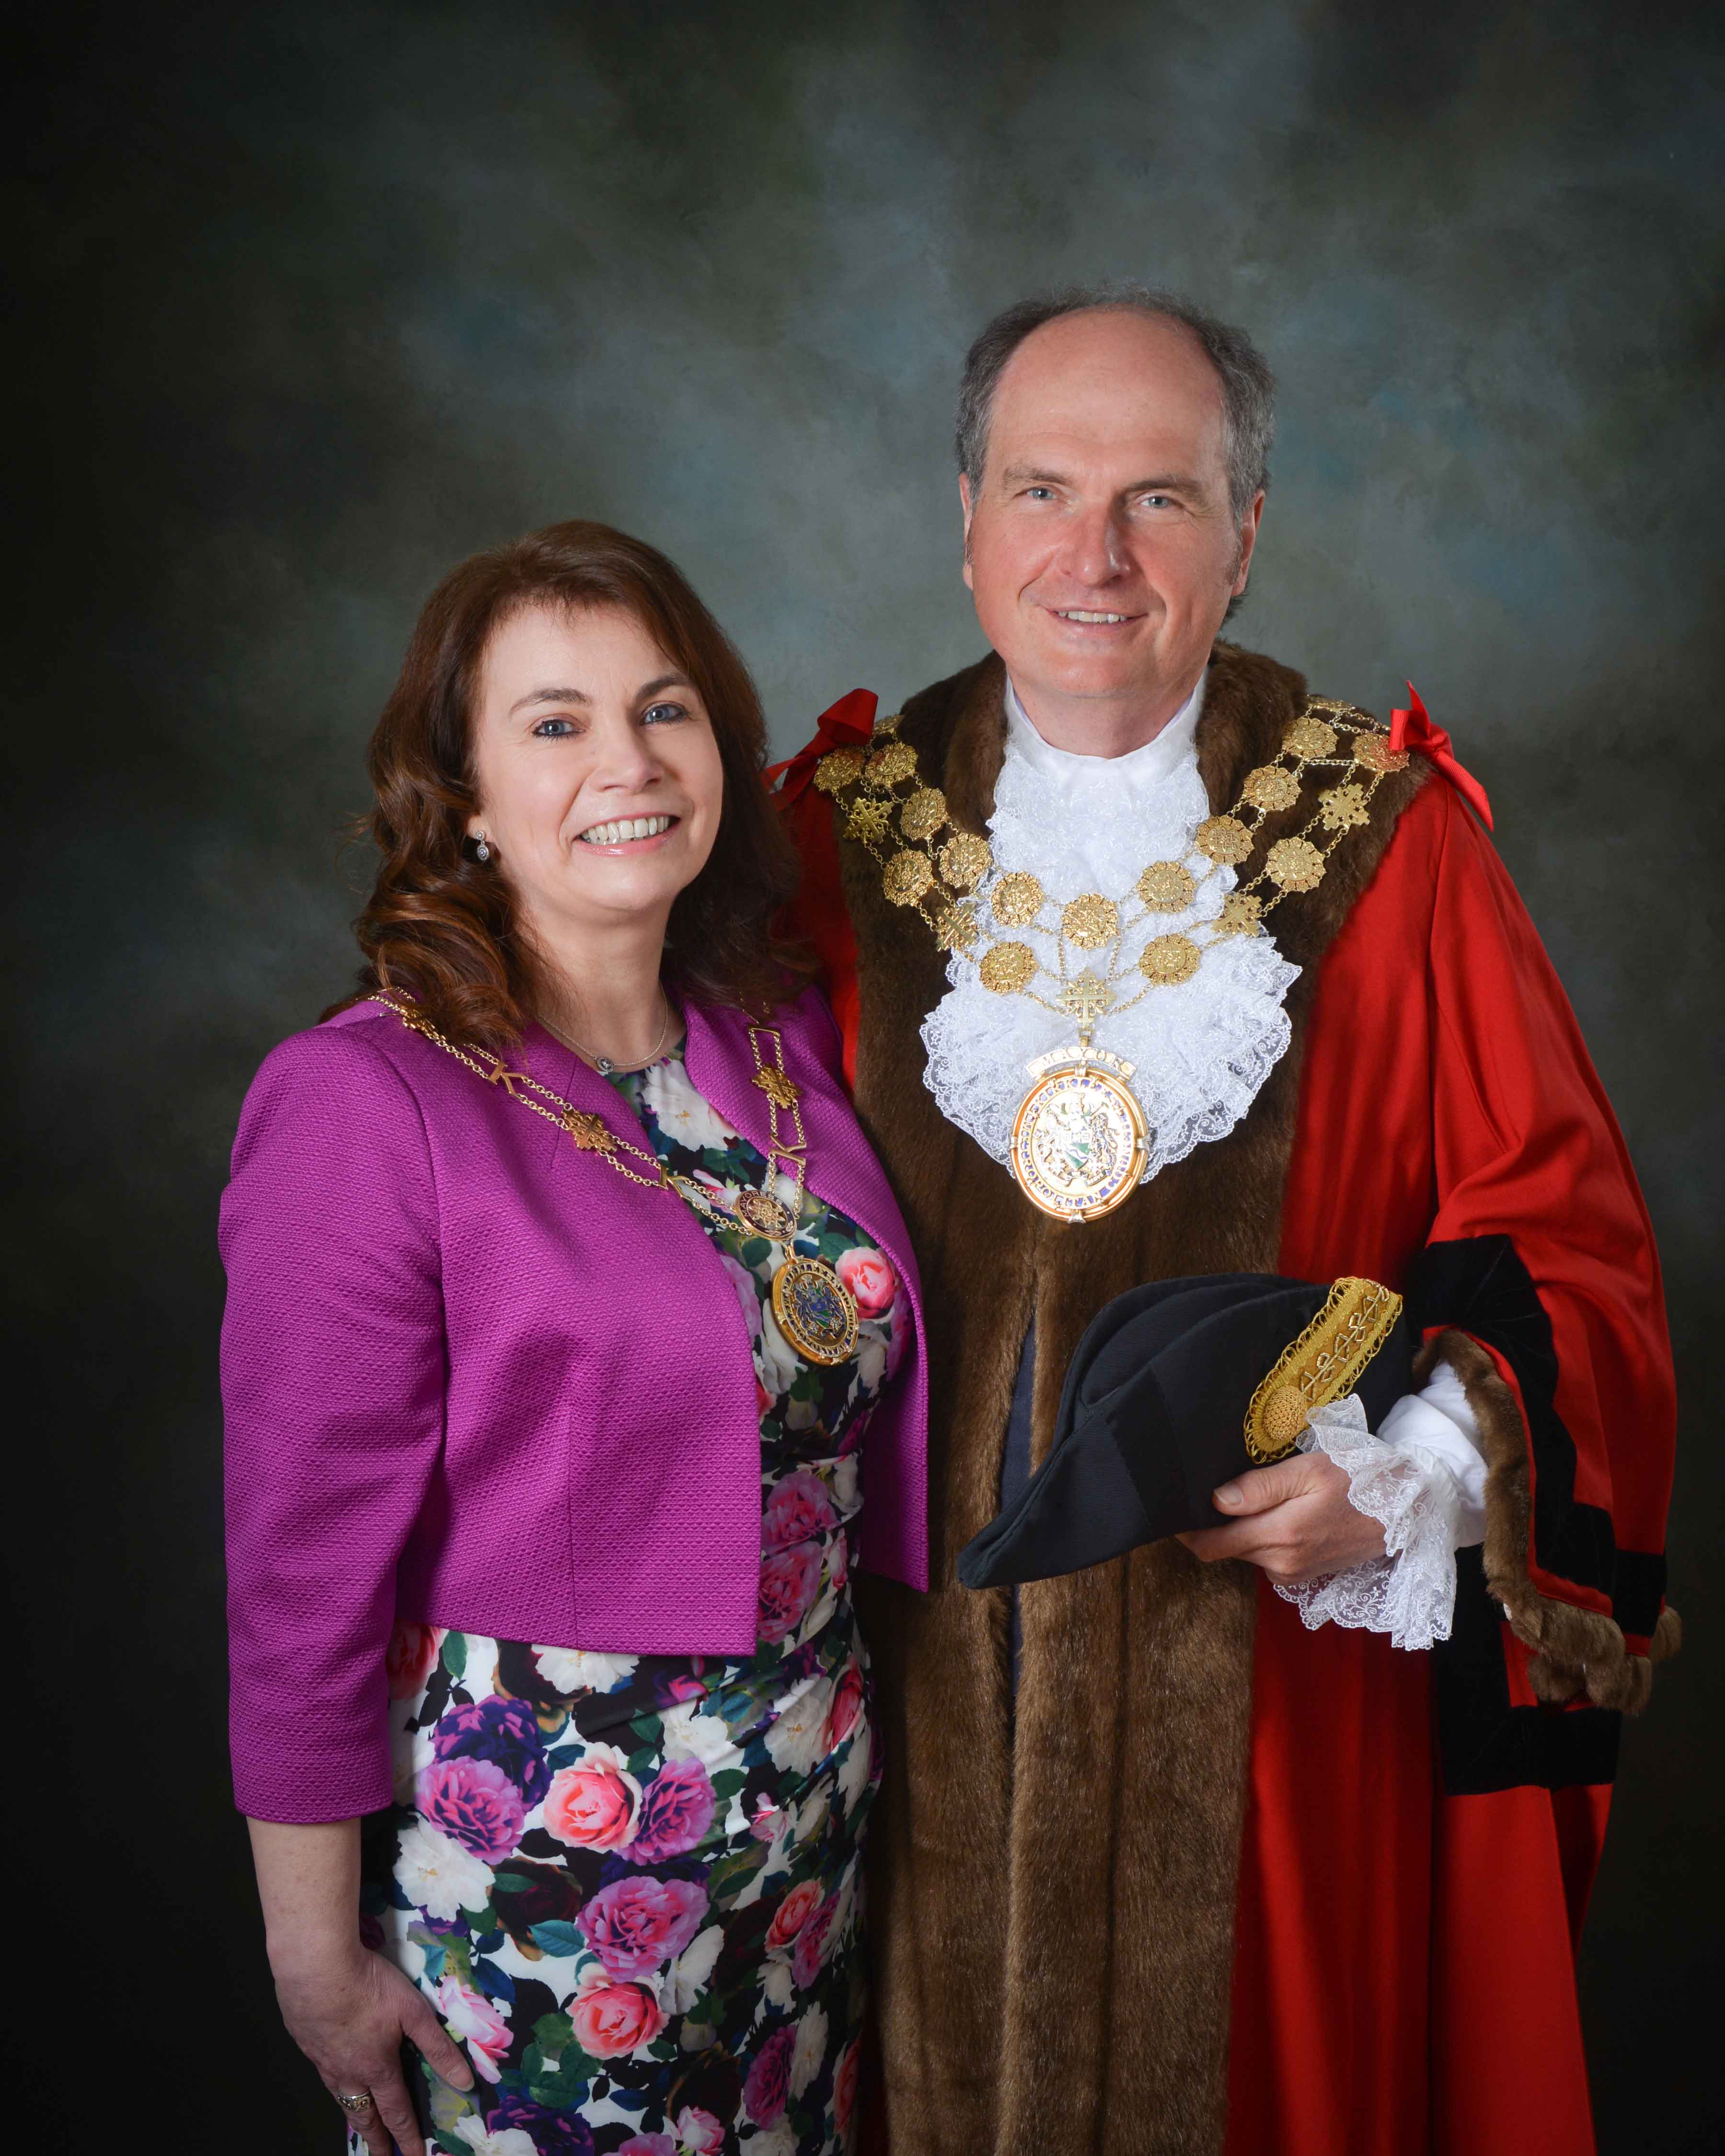 The Mayor and Mayoress of Kirklees, Councillor Nigel Patrick and Judith Patrick